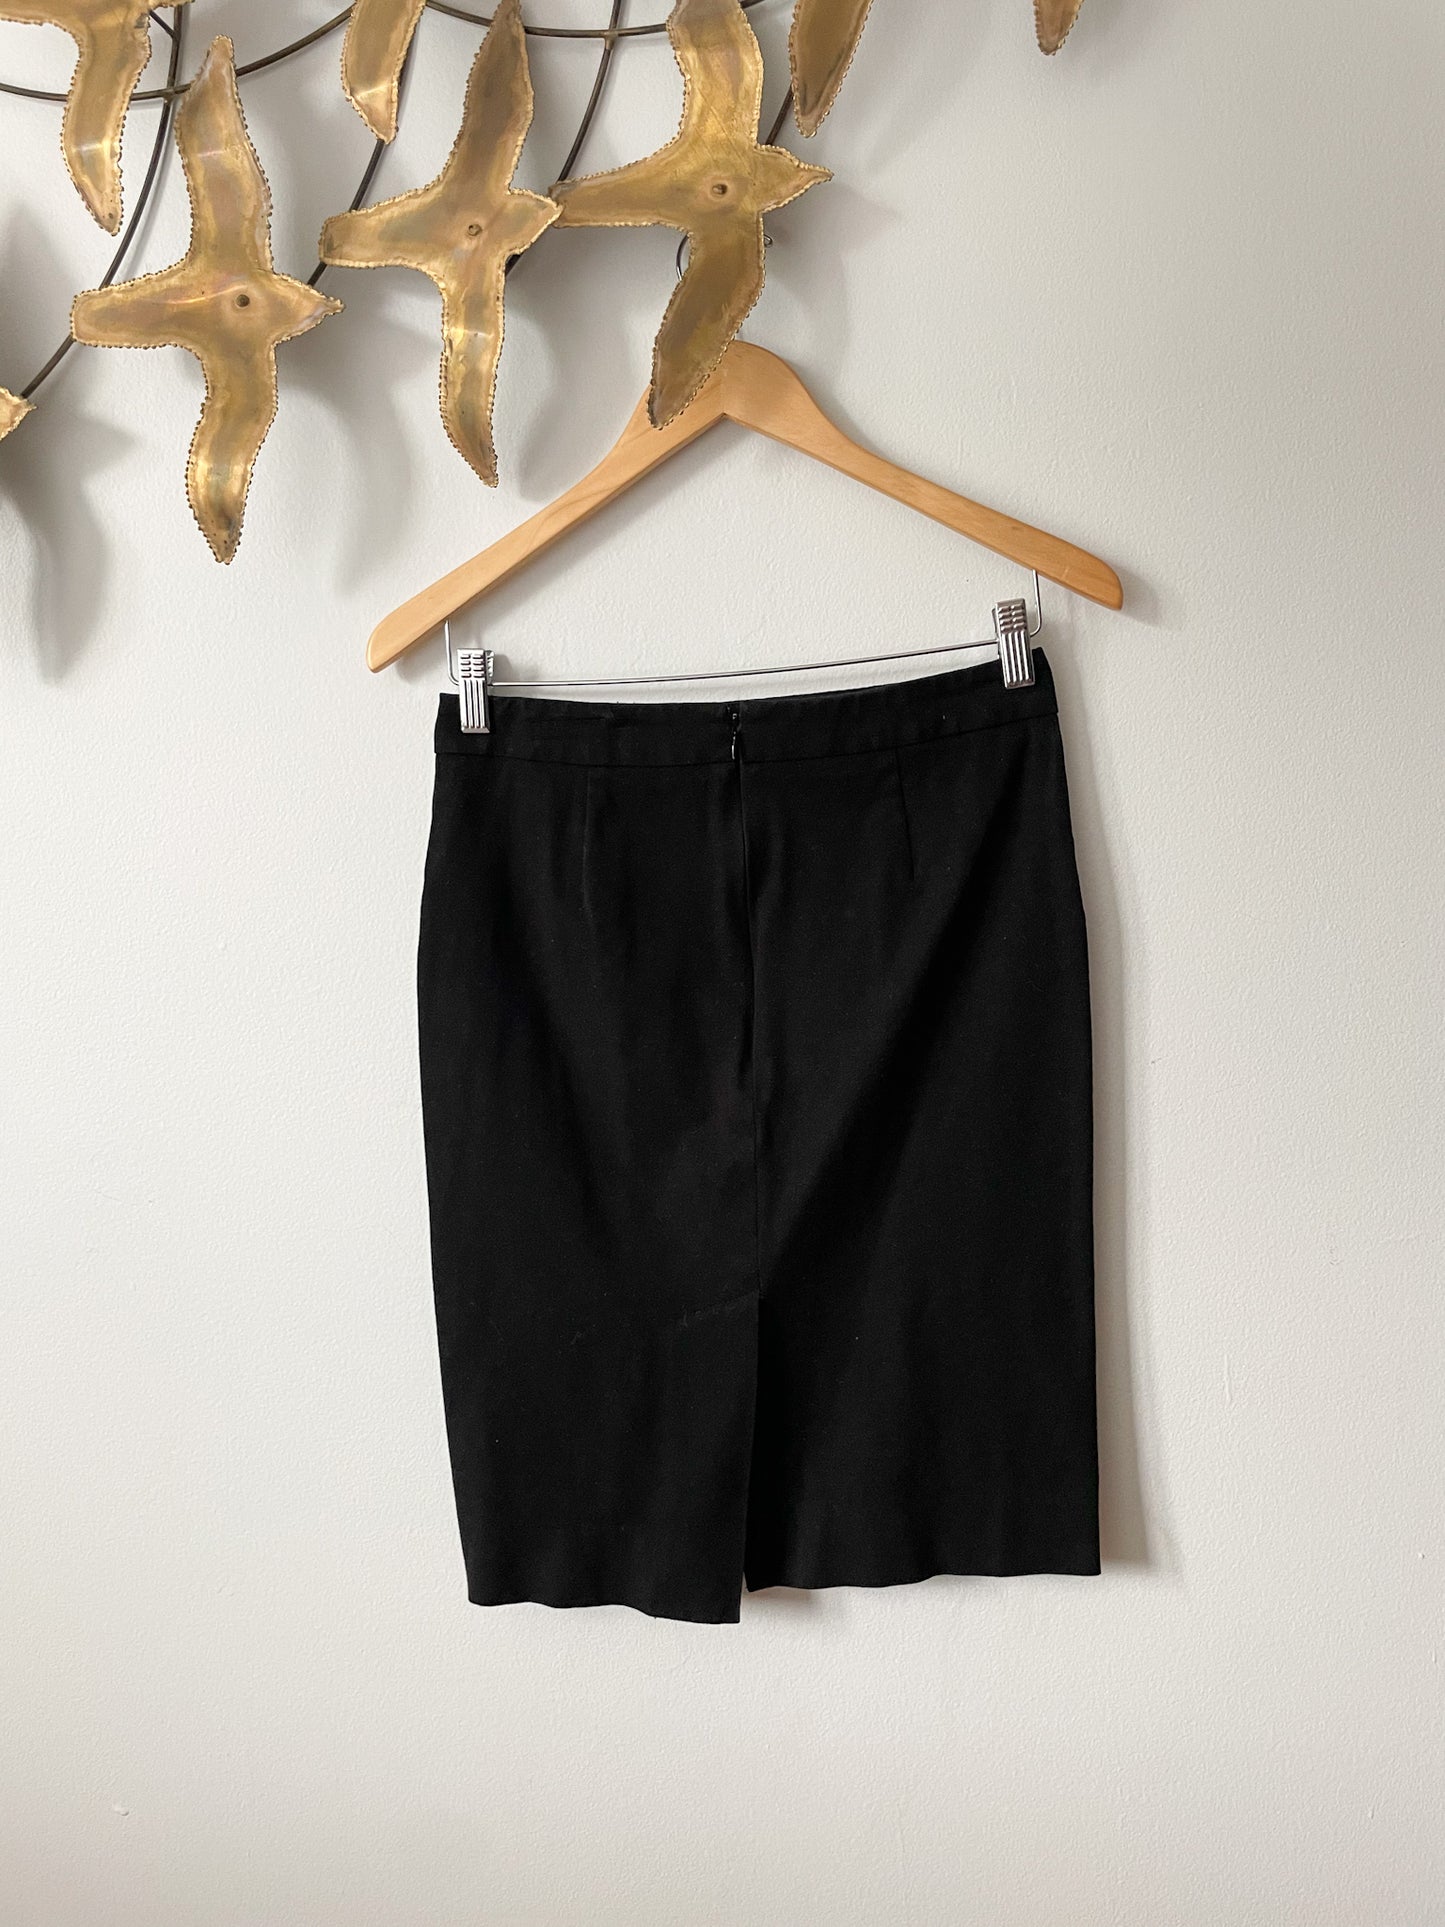 GAP Black Cotton Stretch Pencil Skirt - Small